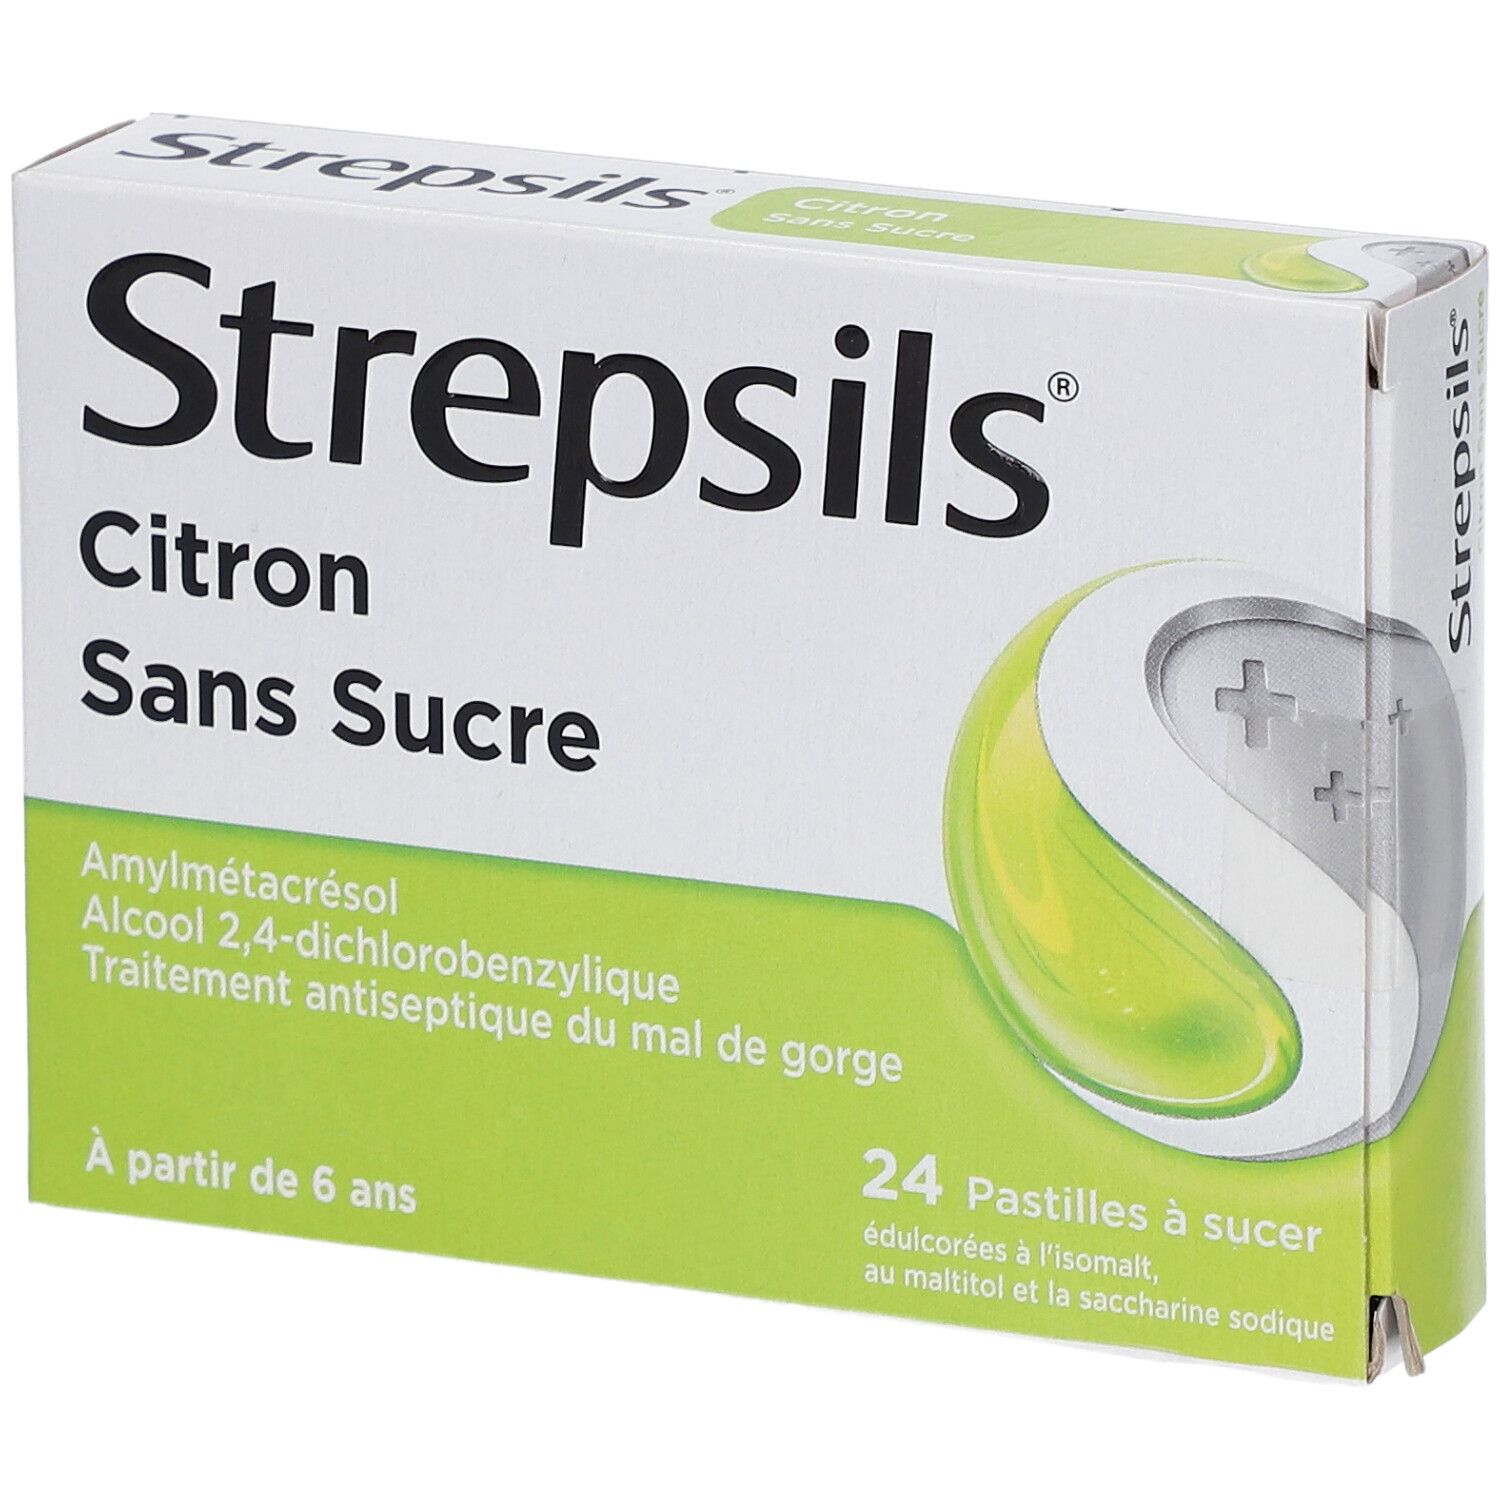 Strepsils® Citron s/s